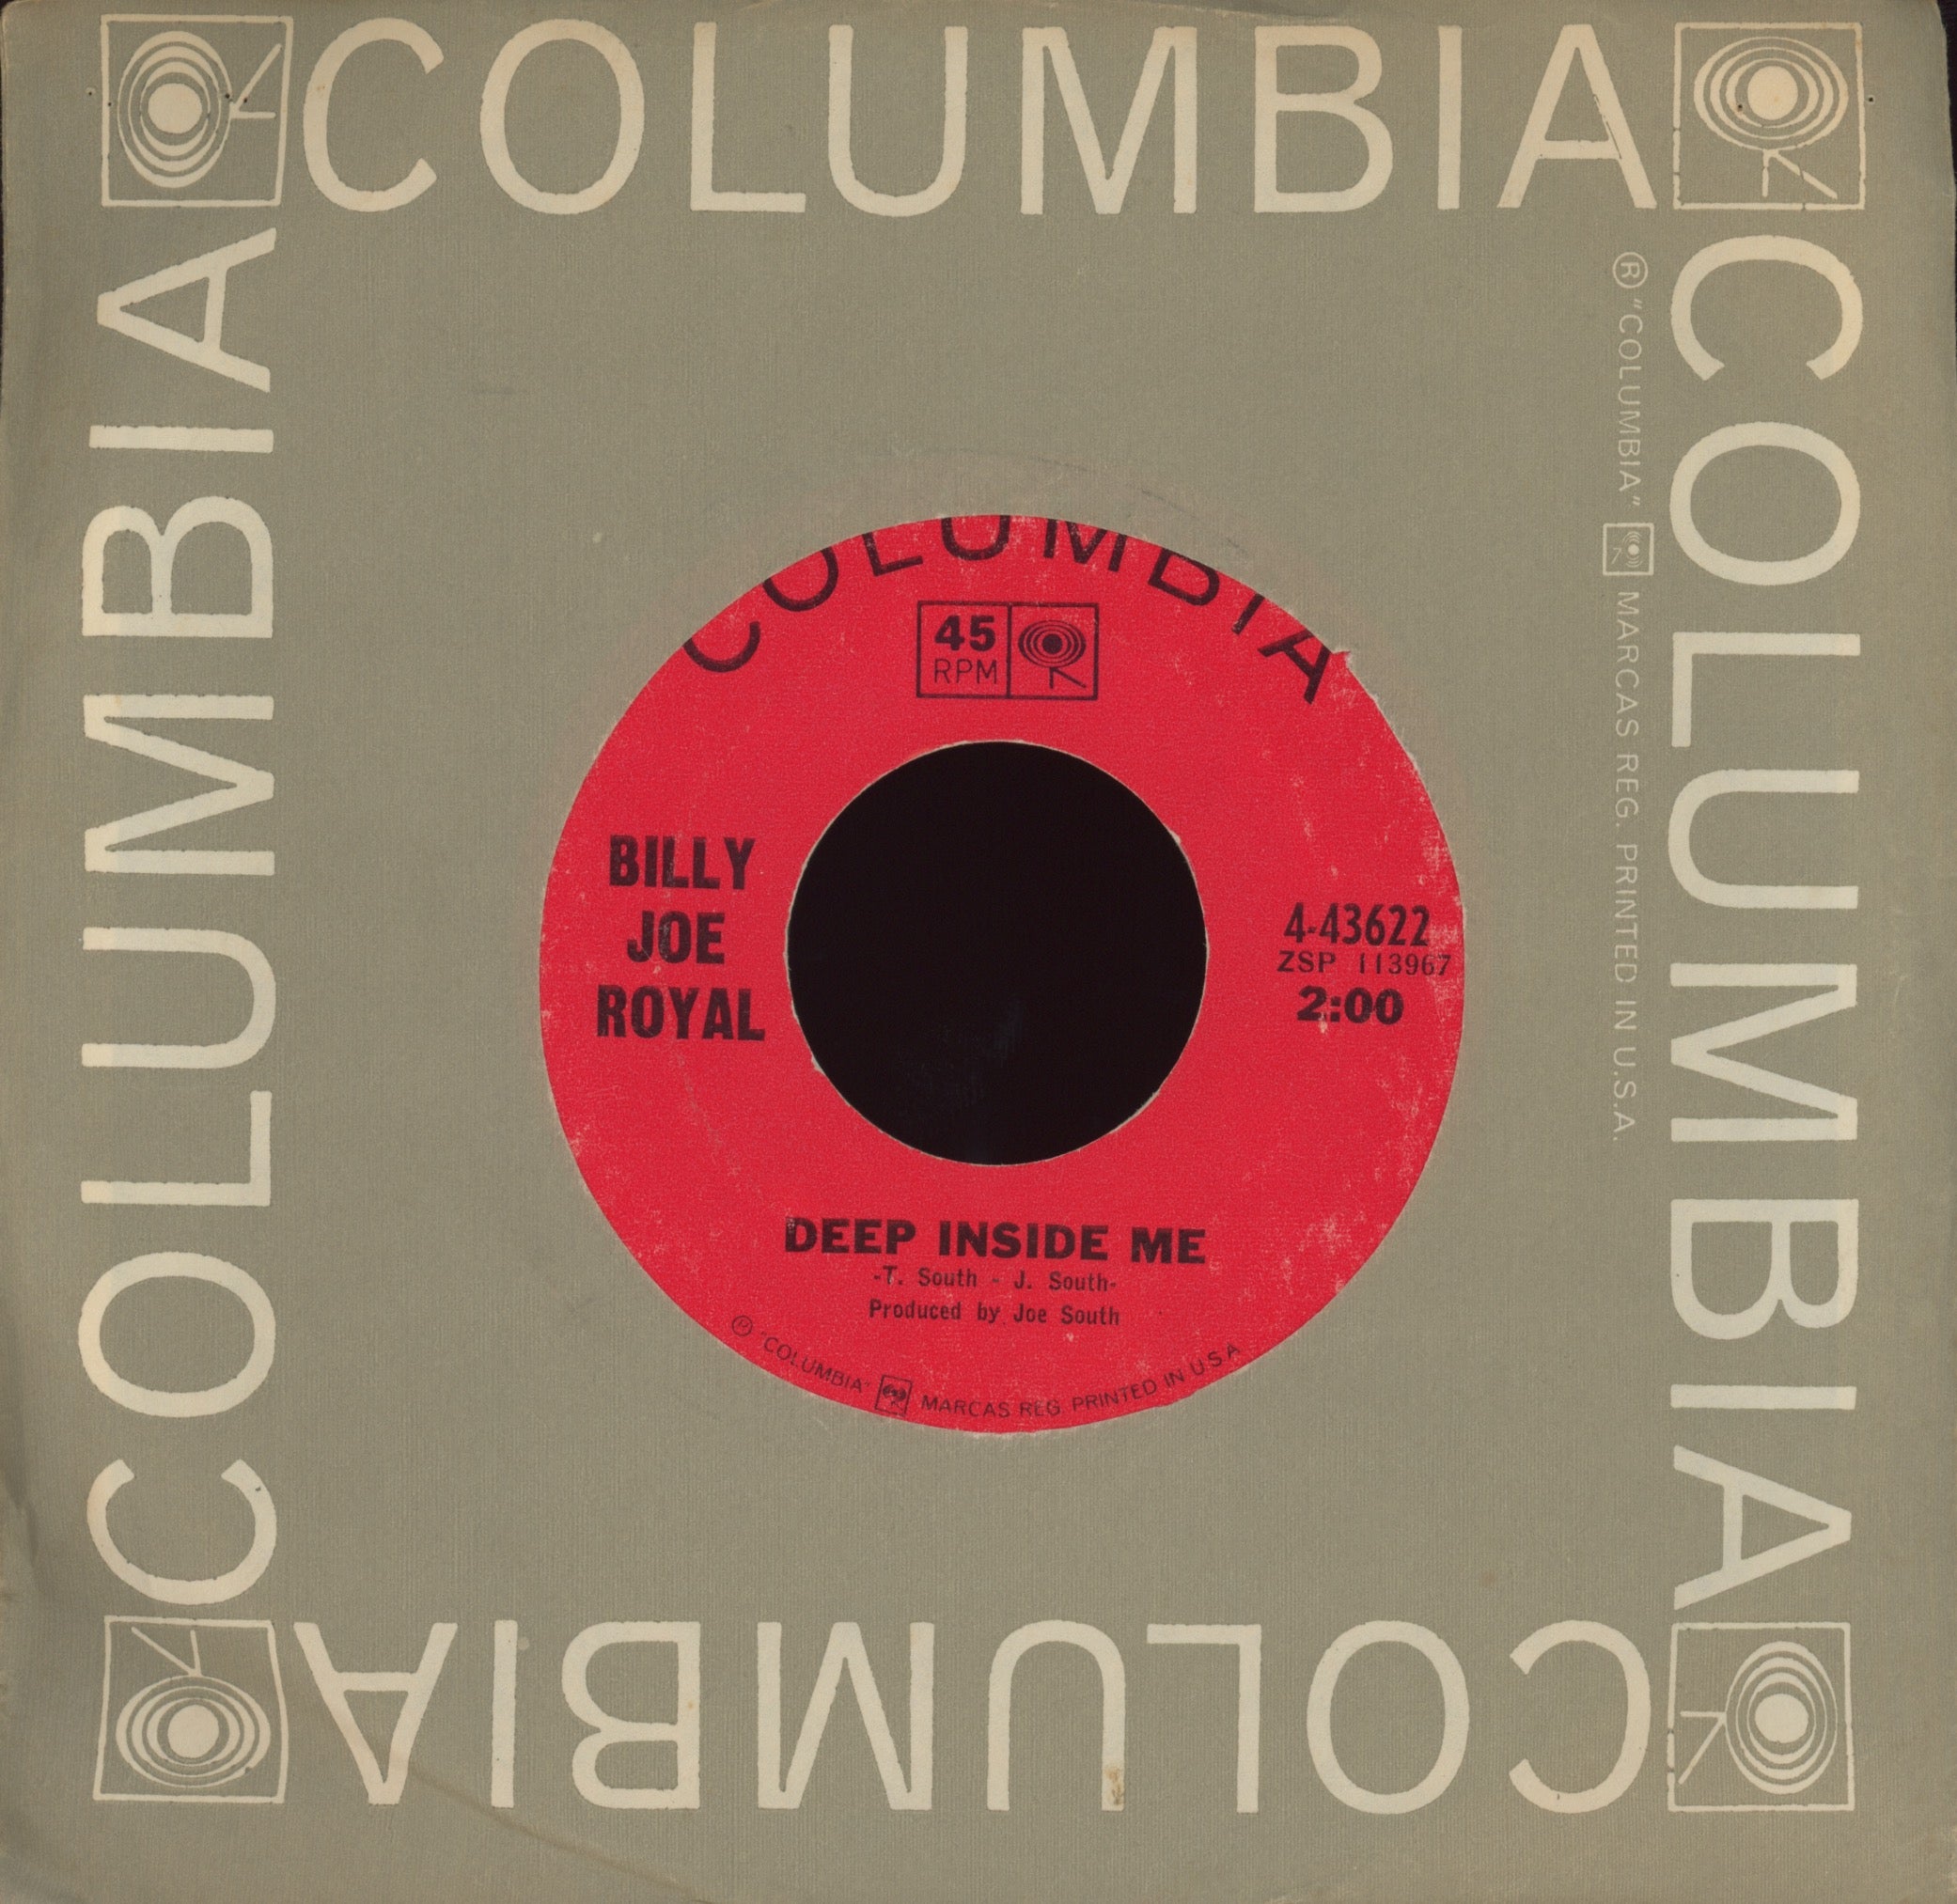 Billy Joe Royal - Heart's Desire on Columbia